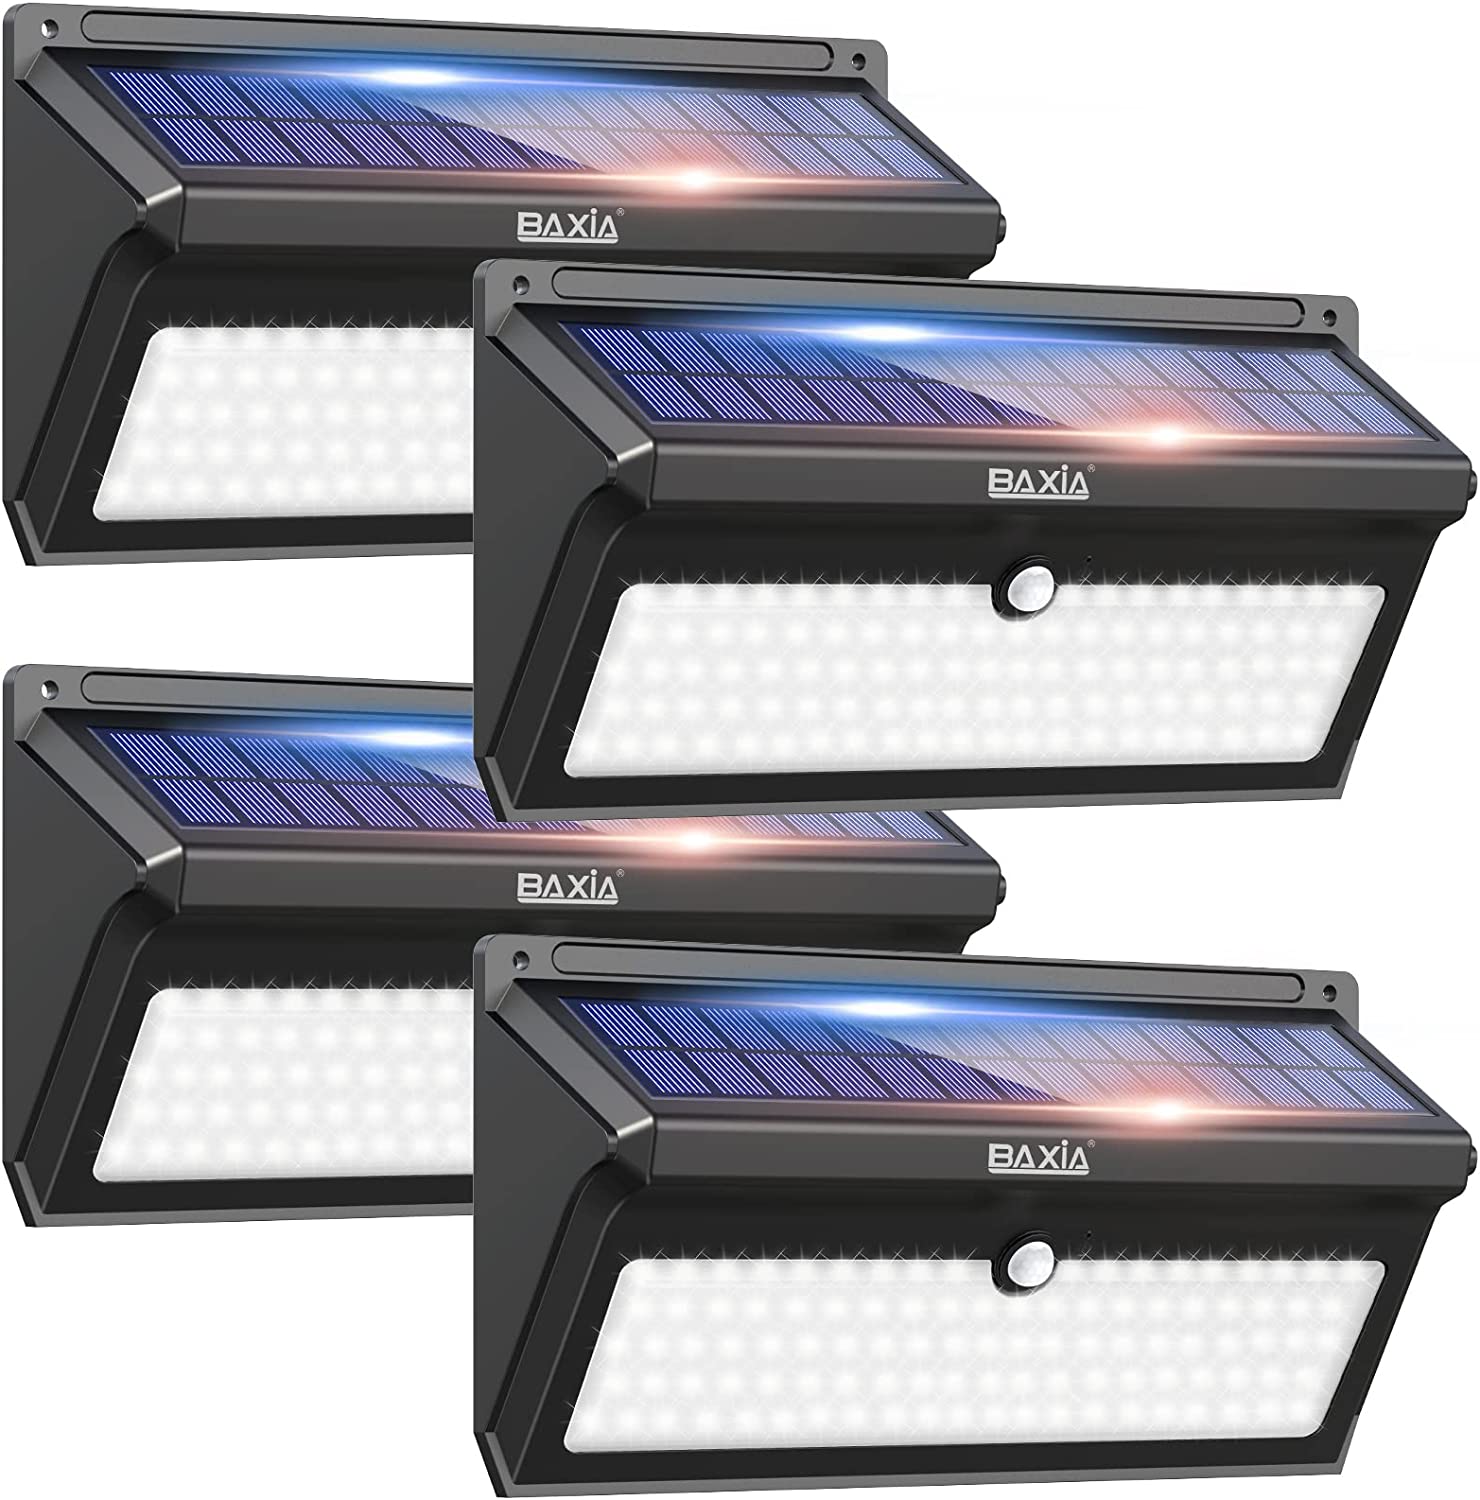 Lightweight Portable Solar Panels Lack Durability